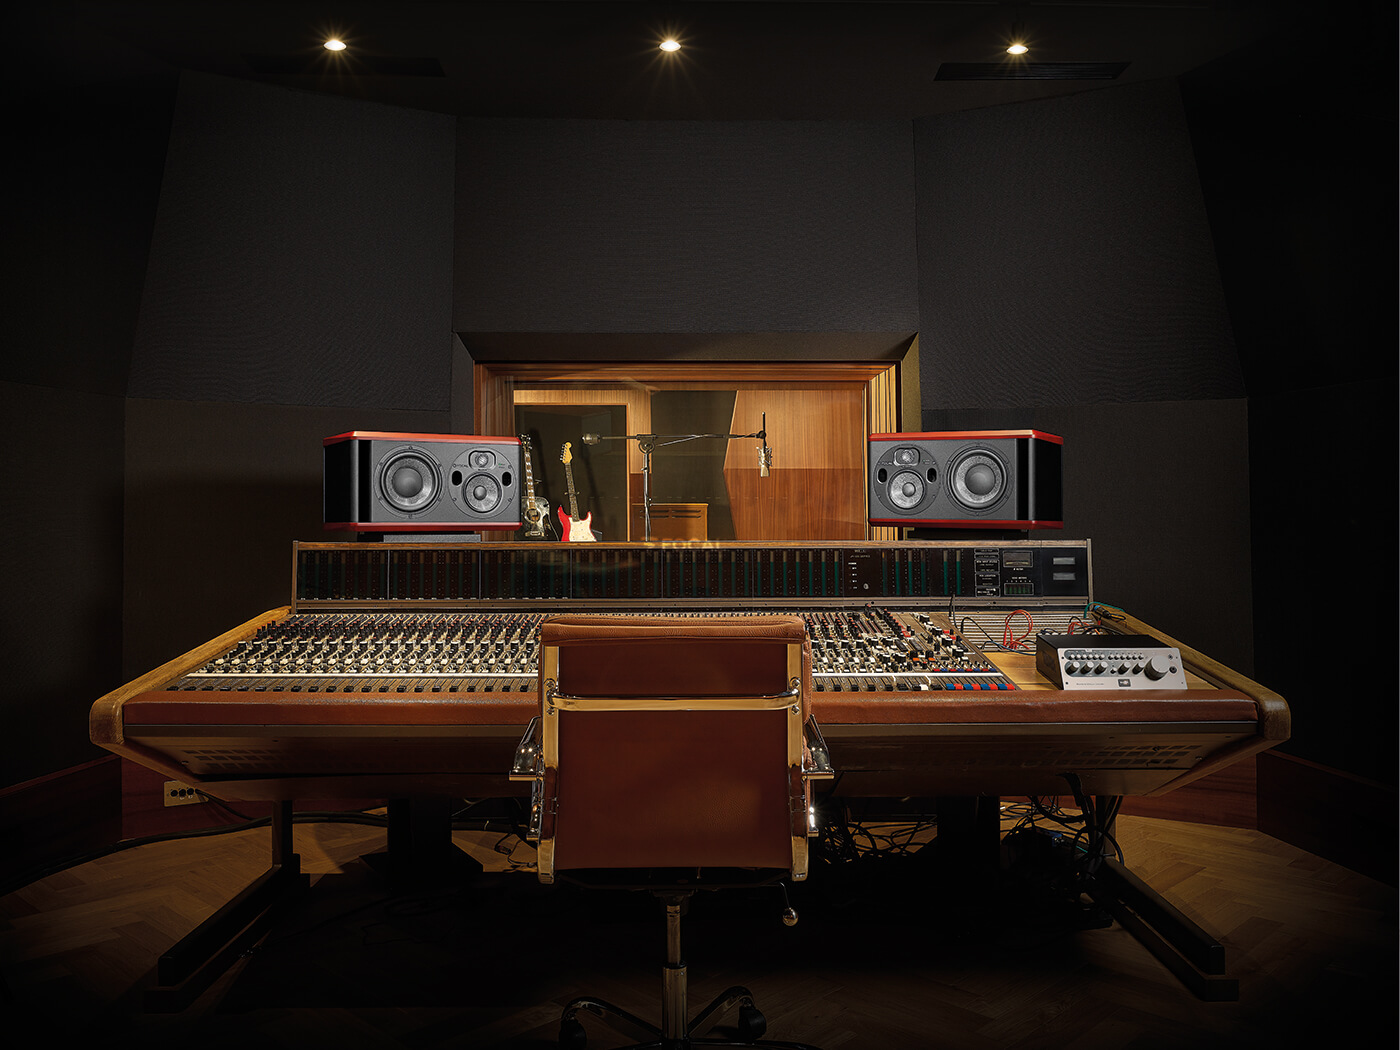 Focal Trio6 studio monitors on mixing desk in recording studio